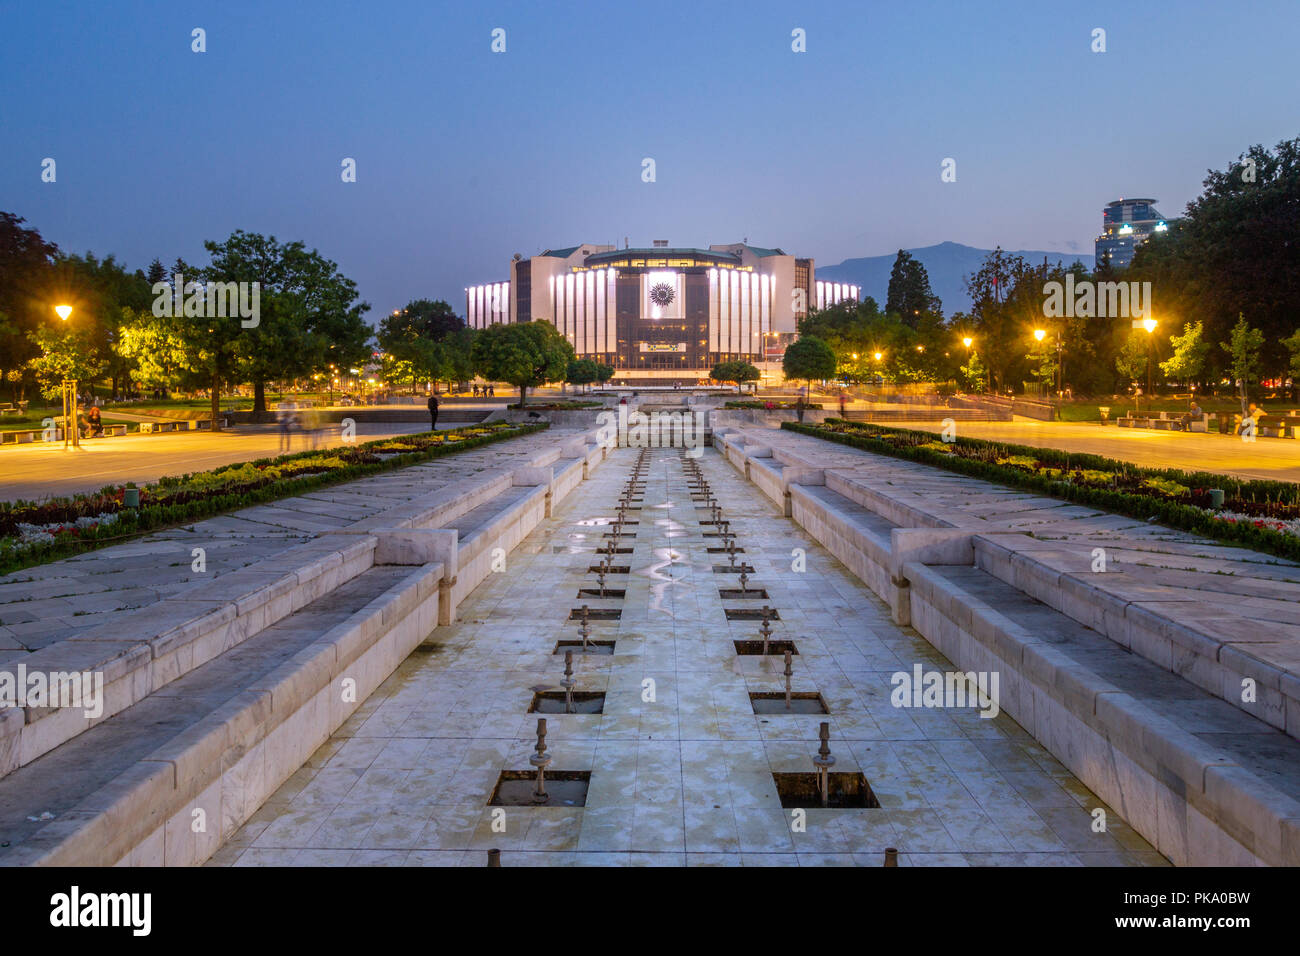 National Palace of Culture, Sofia - Bulgaria Stock Photo